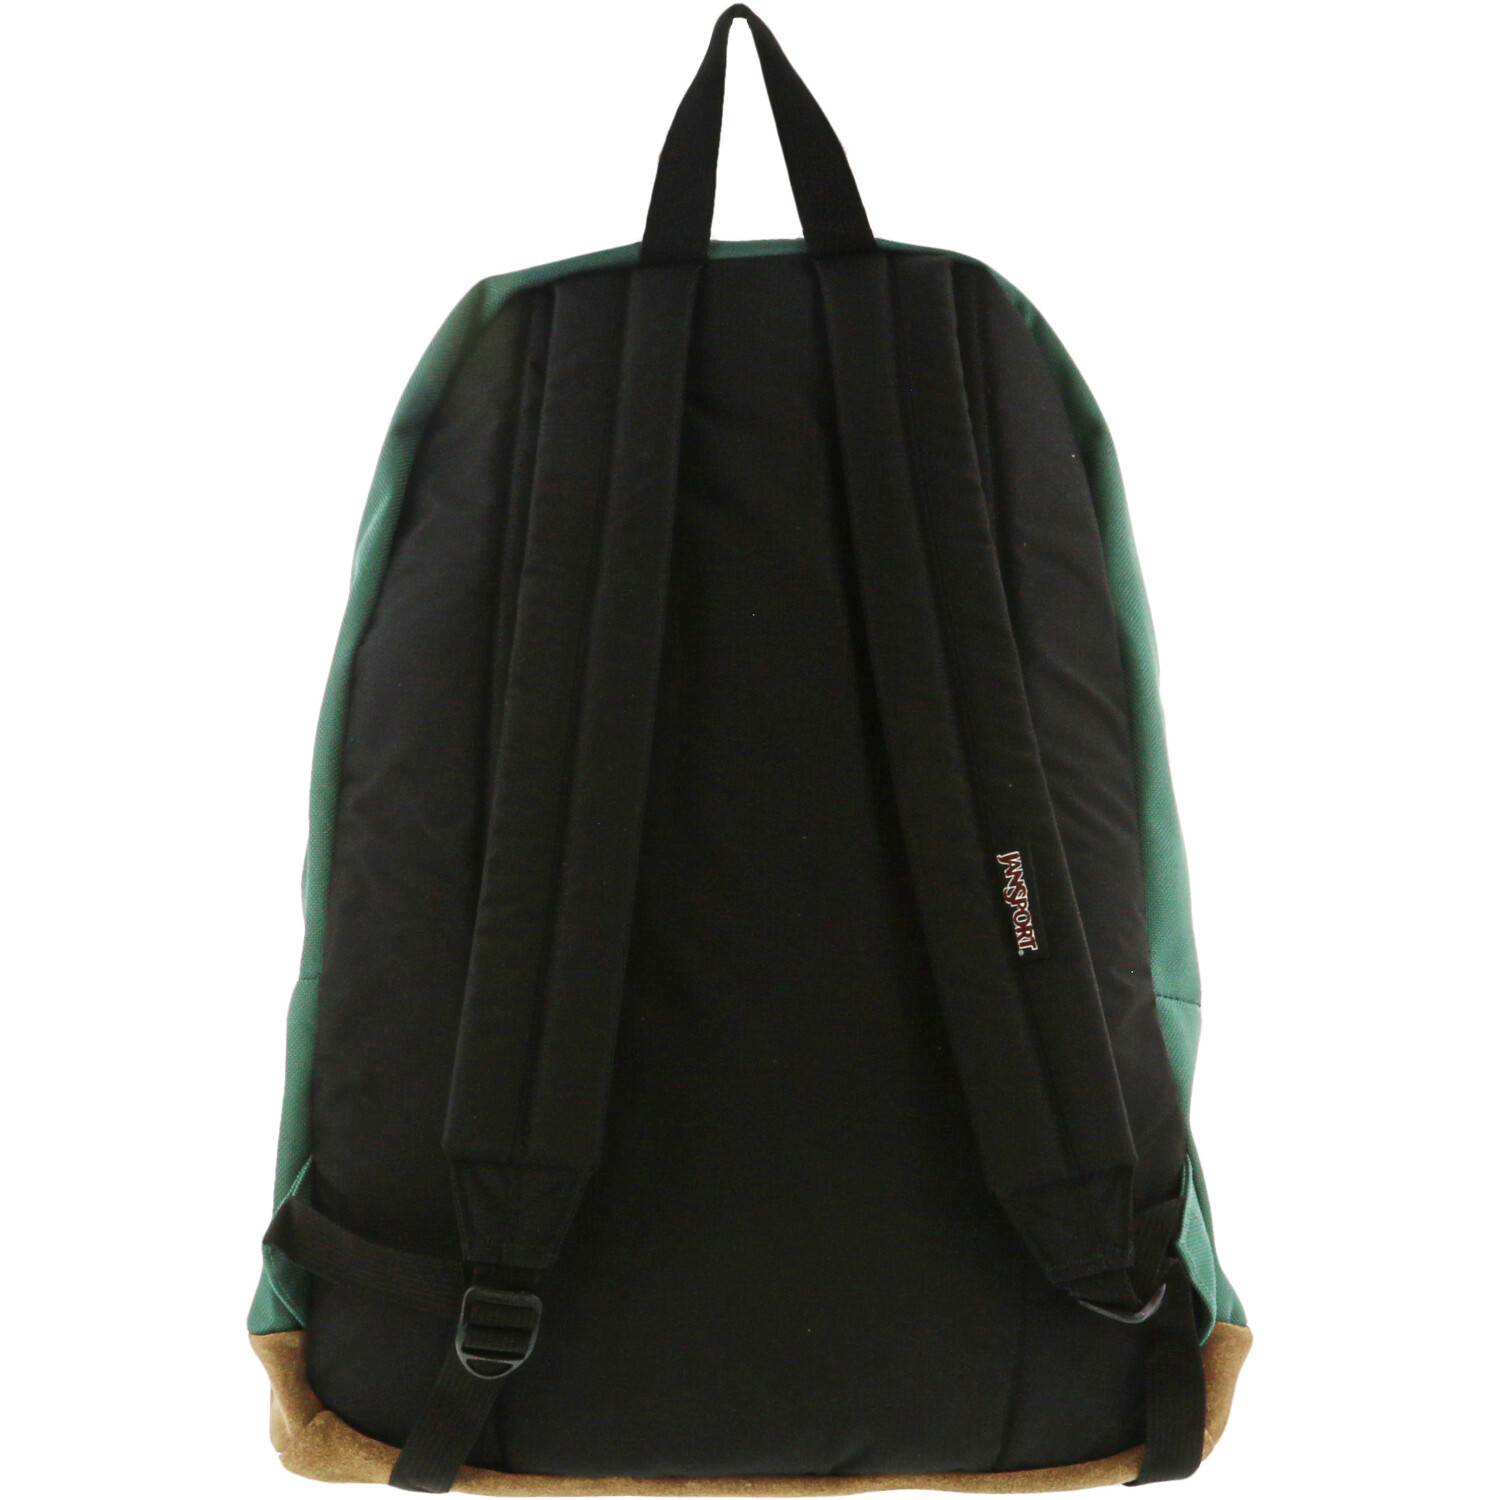 Jansport Men's Right Pack Polyester Backpack - Blue Spruce Green - image 3 of 3